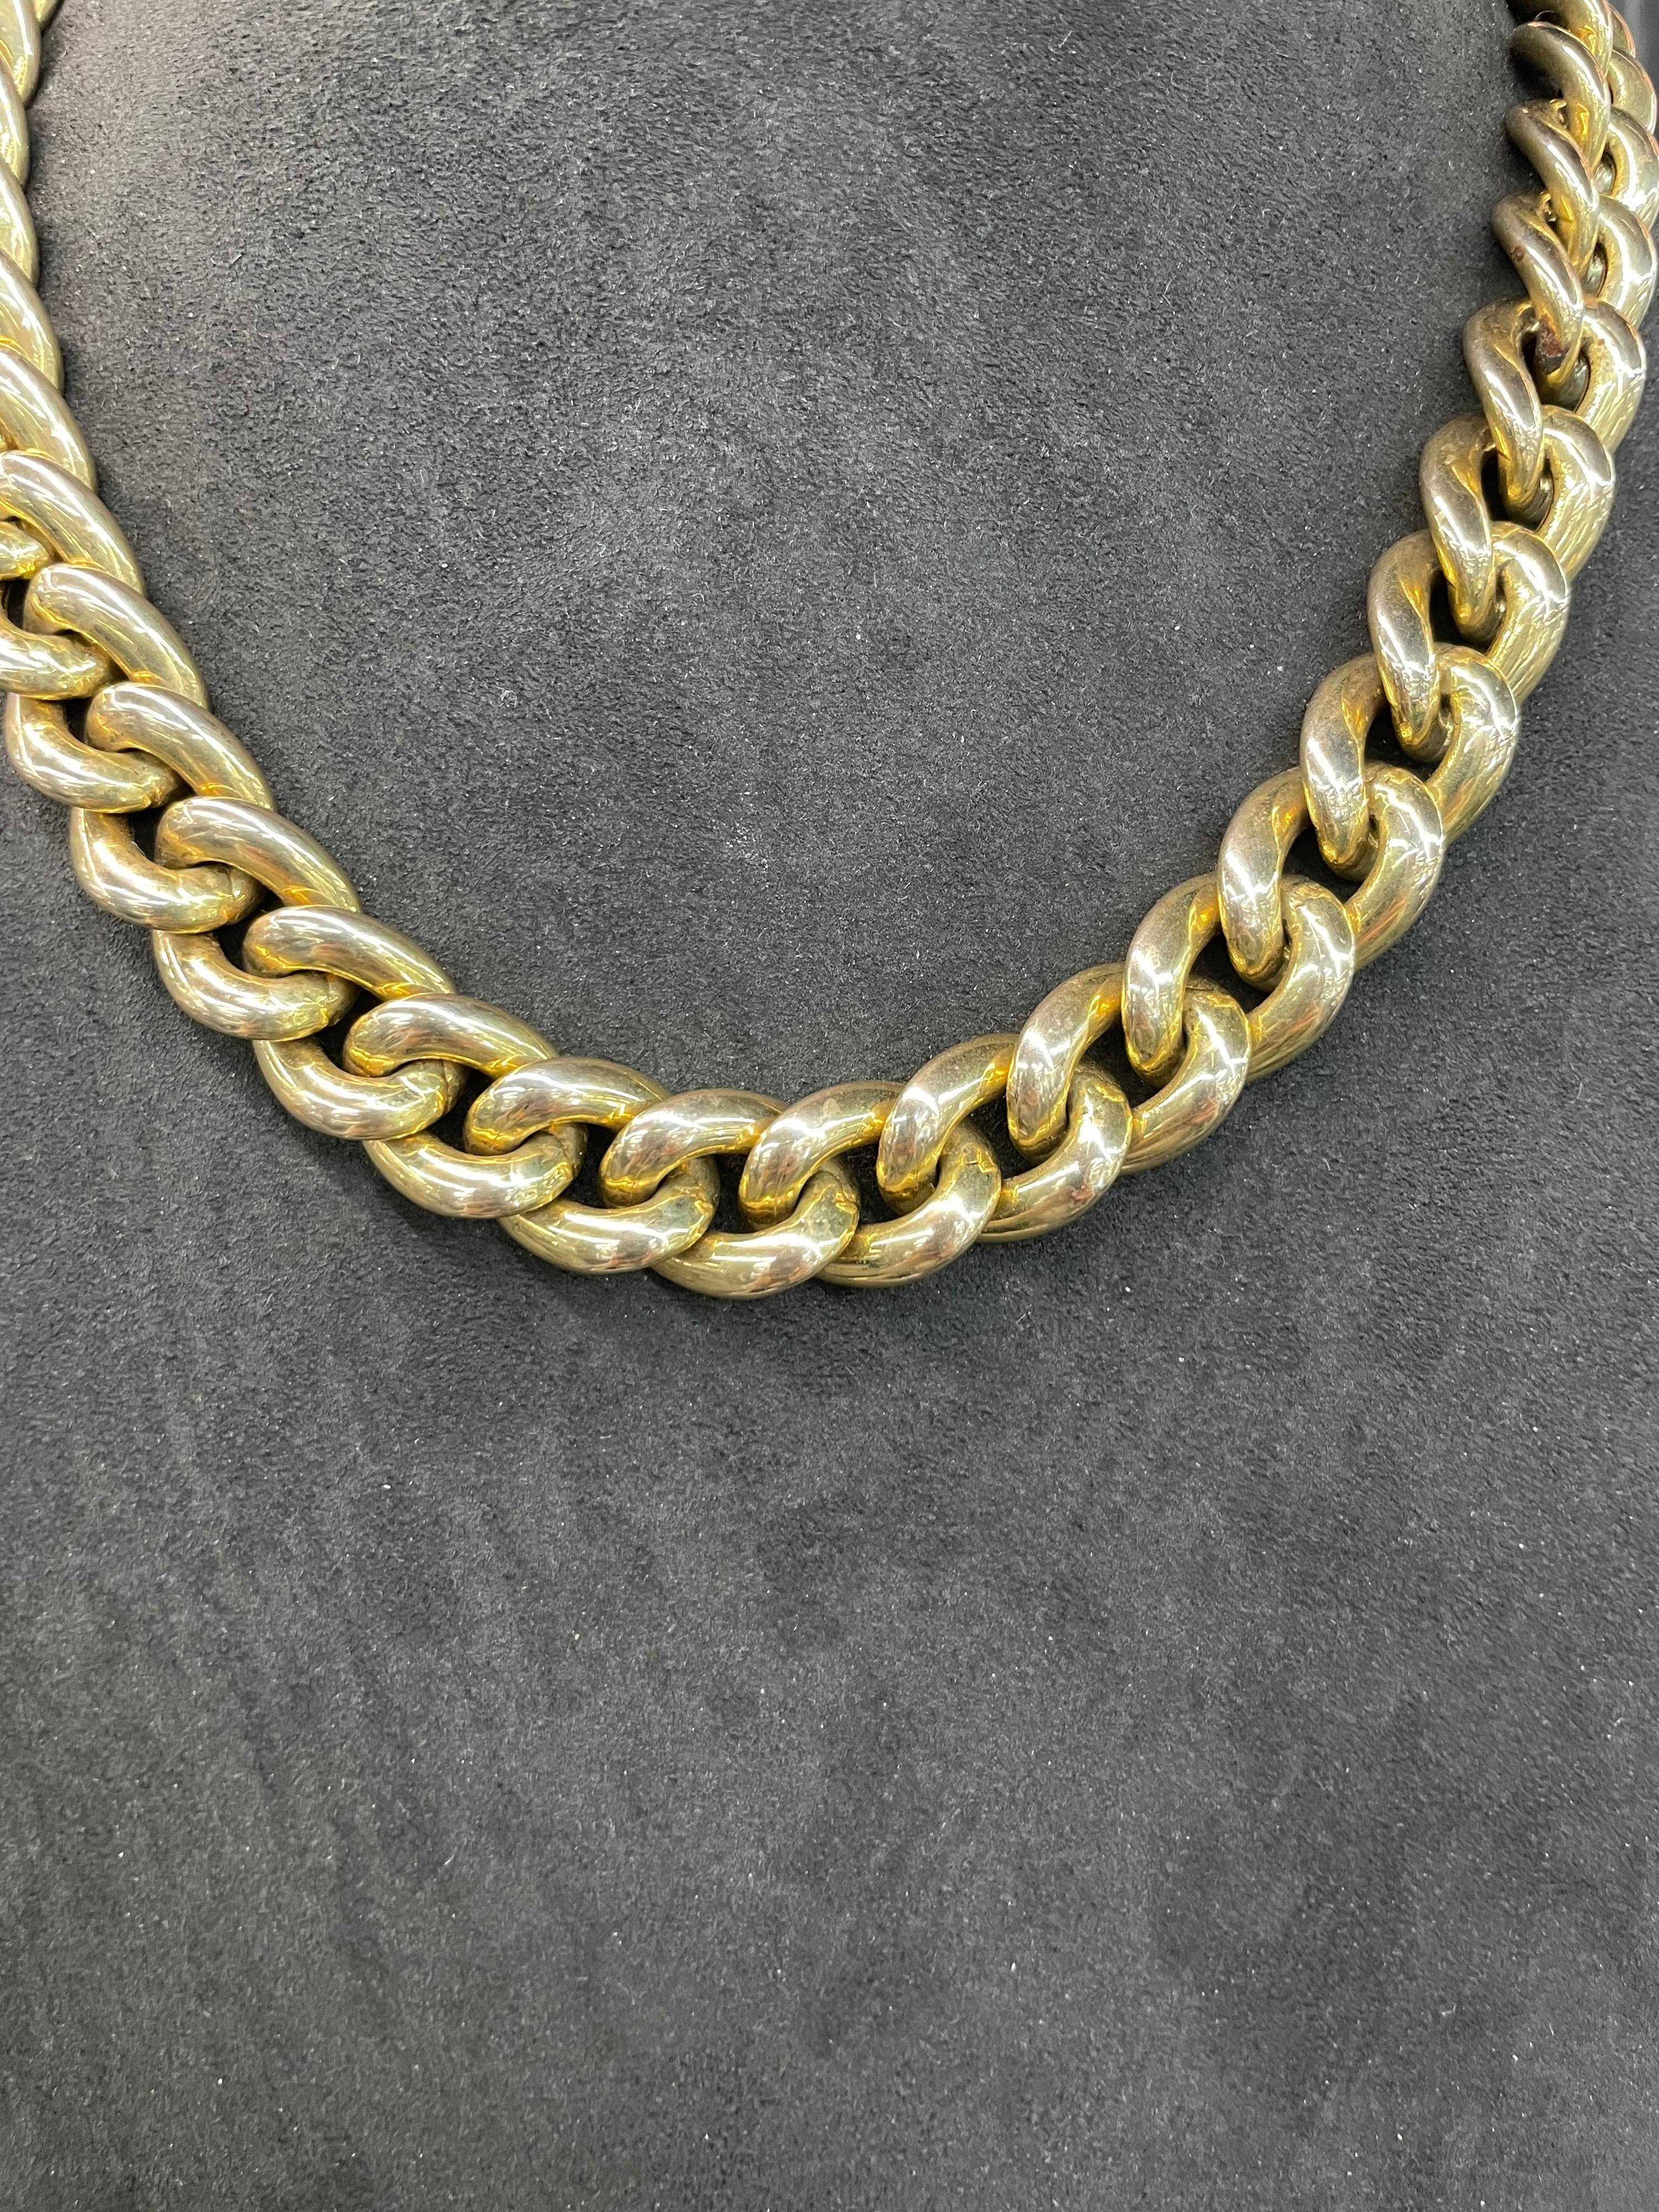 14 Karat Yellow Gold Link Bracelet 23.4 Grams, Made in Italy 2